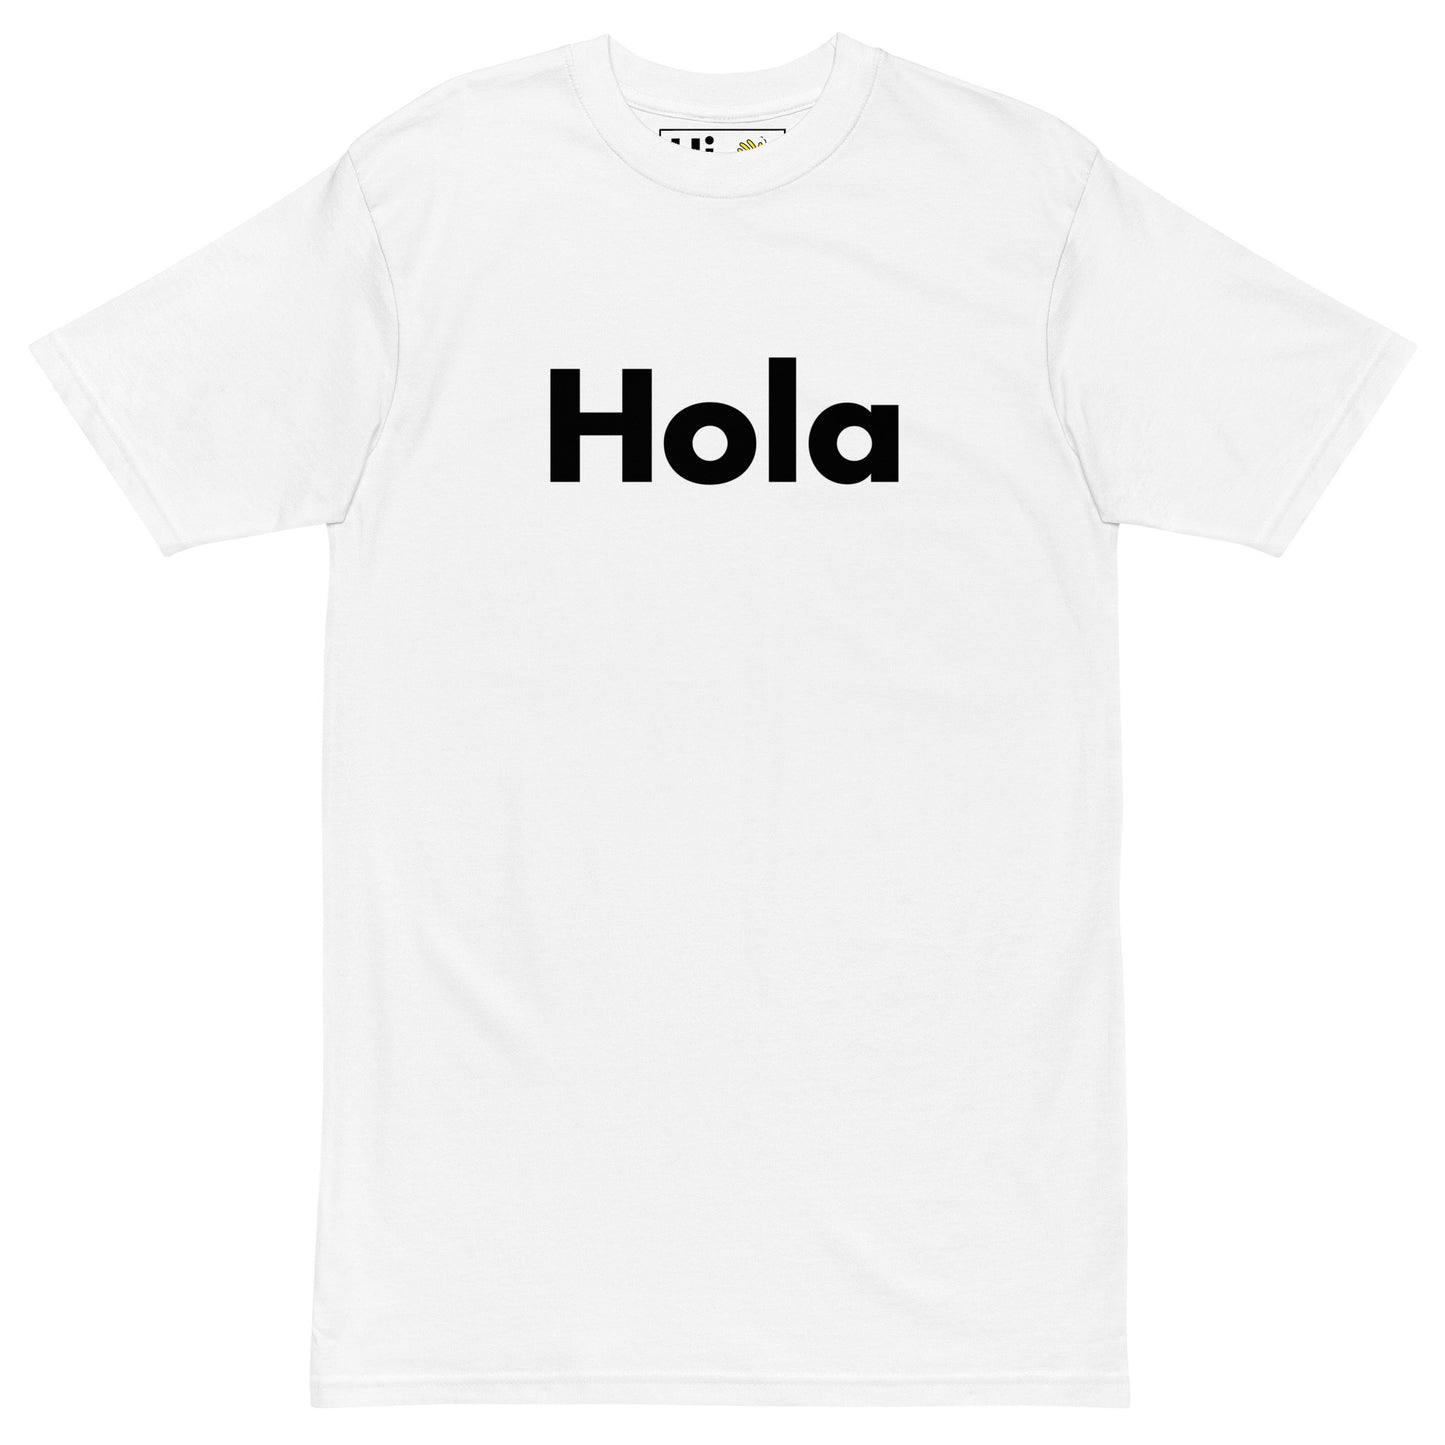 Hi Hola Español